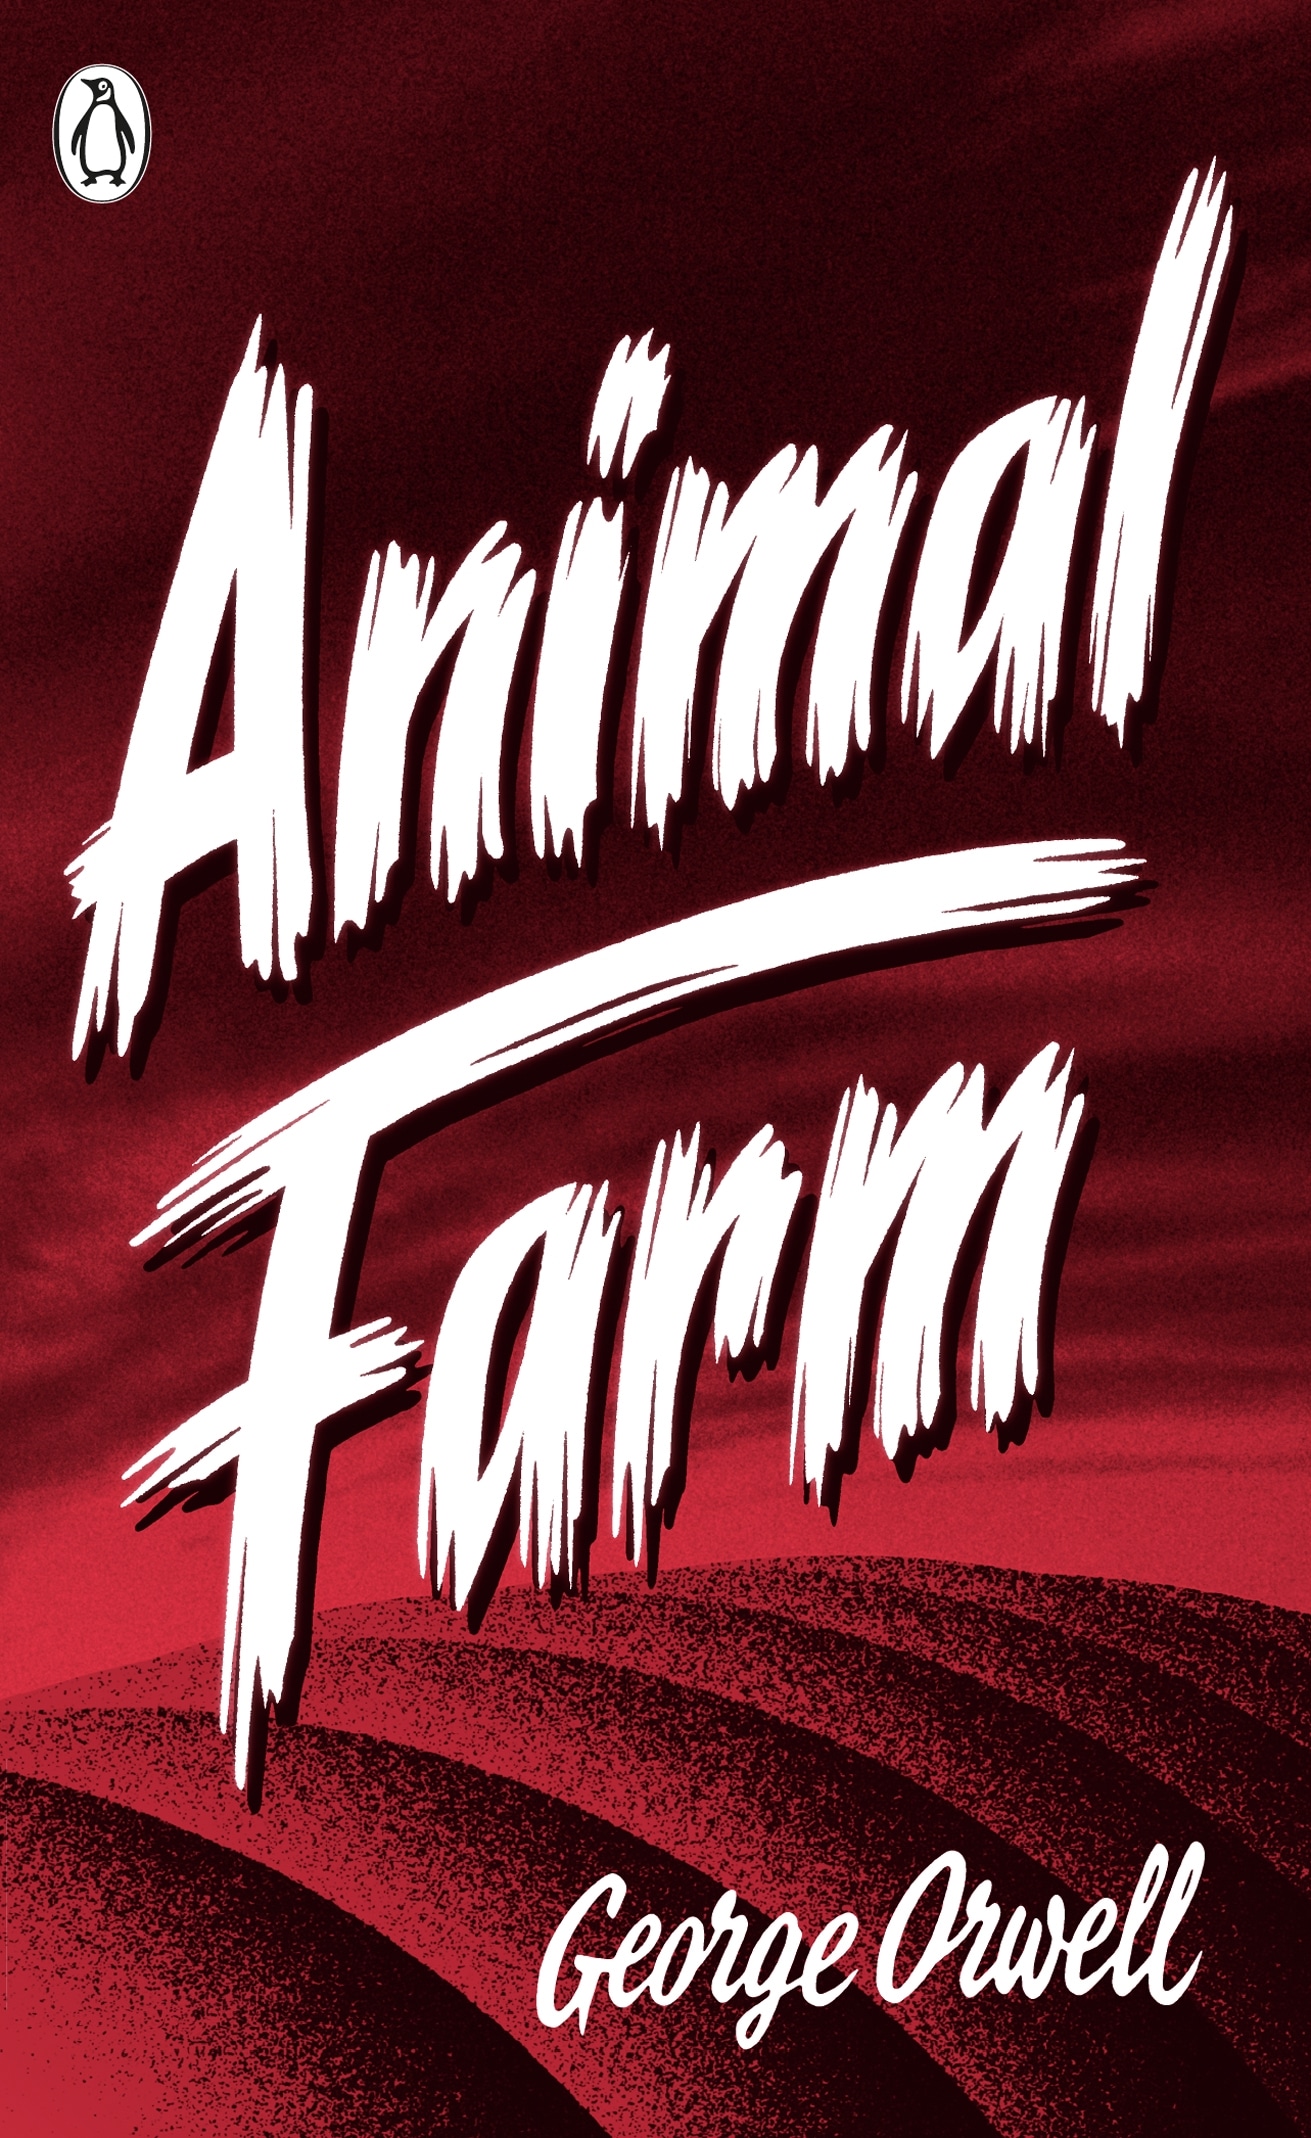 Book “Animal Farm” by George Orwell, Malcolm Bradbury — January 3, 2013